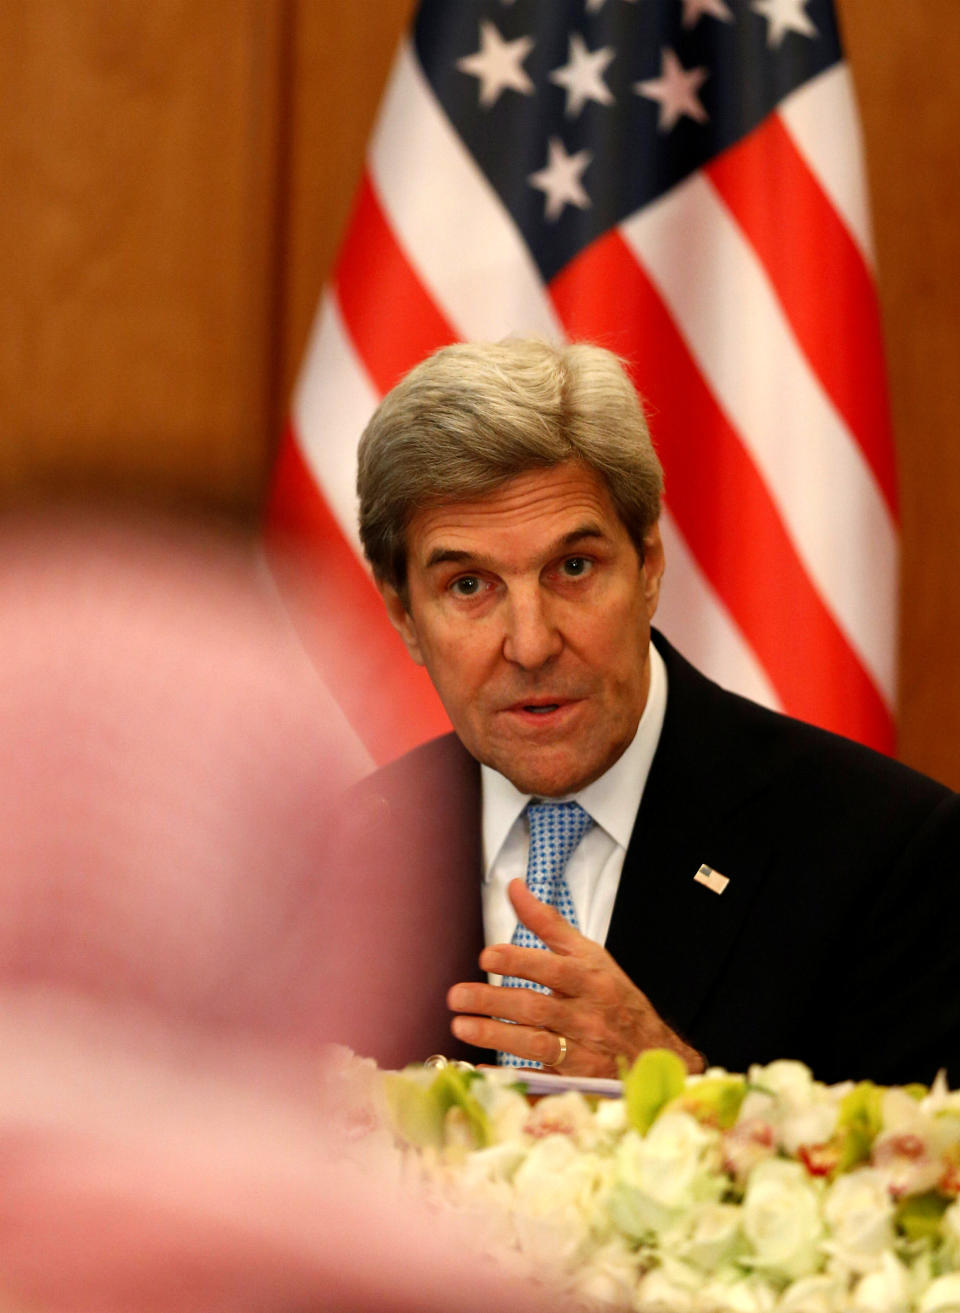 U.S. Secretary of State John Kerry gestures during a news conference in Riyadh, Saudi Arabia December 18, 2016. REUTERS/Faisal Al Nasser